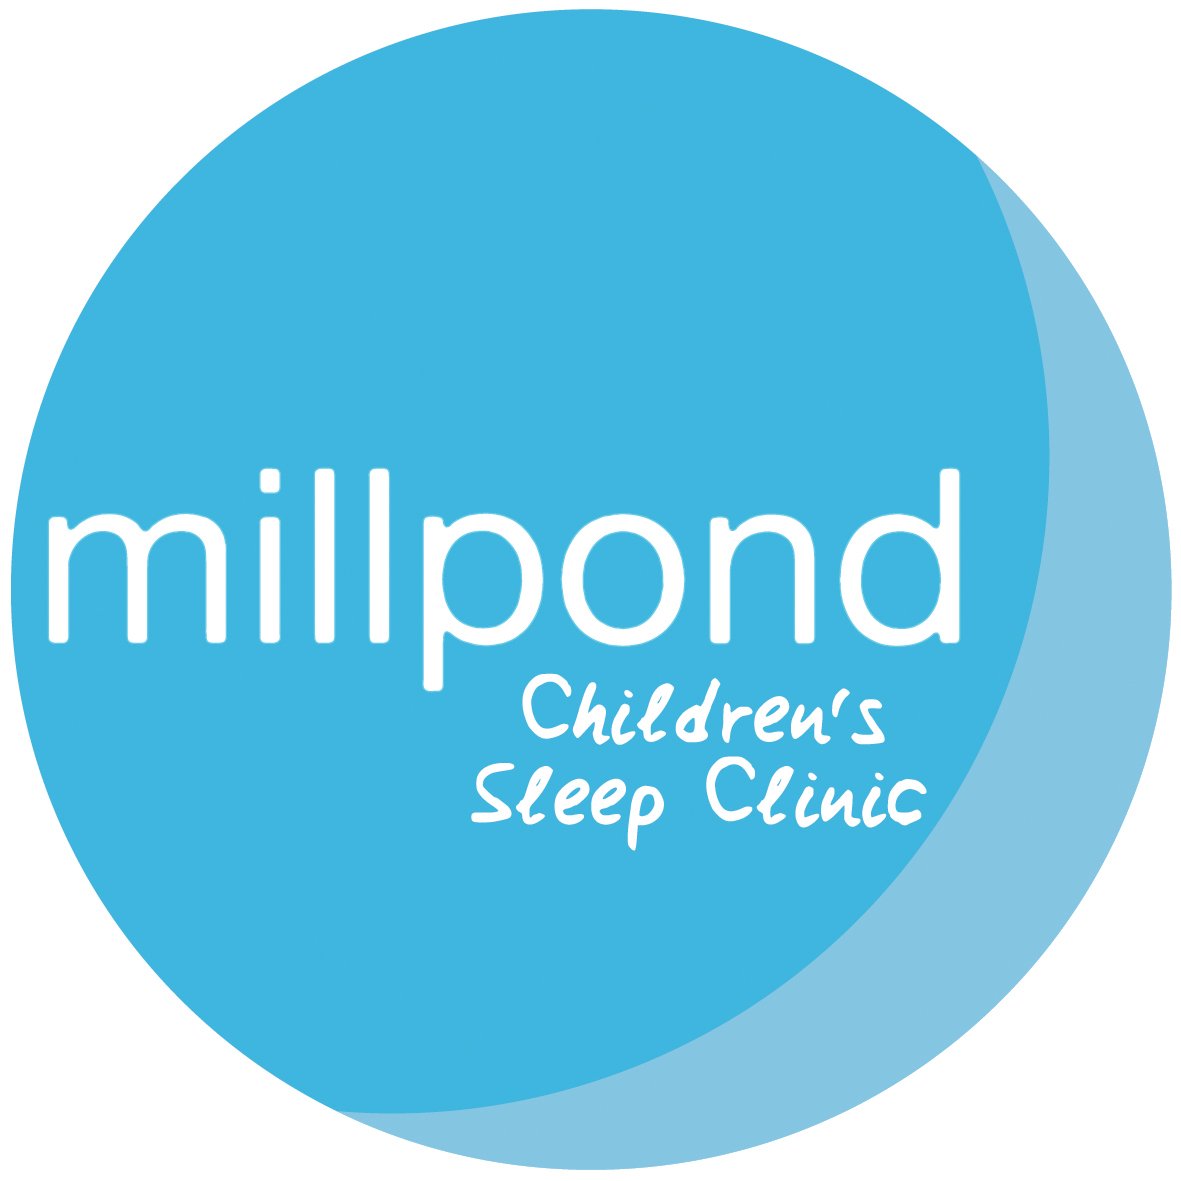 Millpond Childrens Sleep Clinic